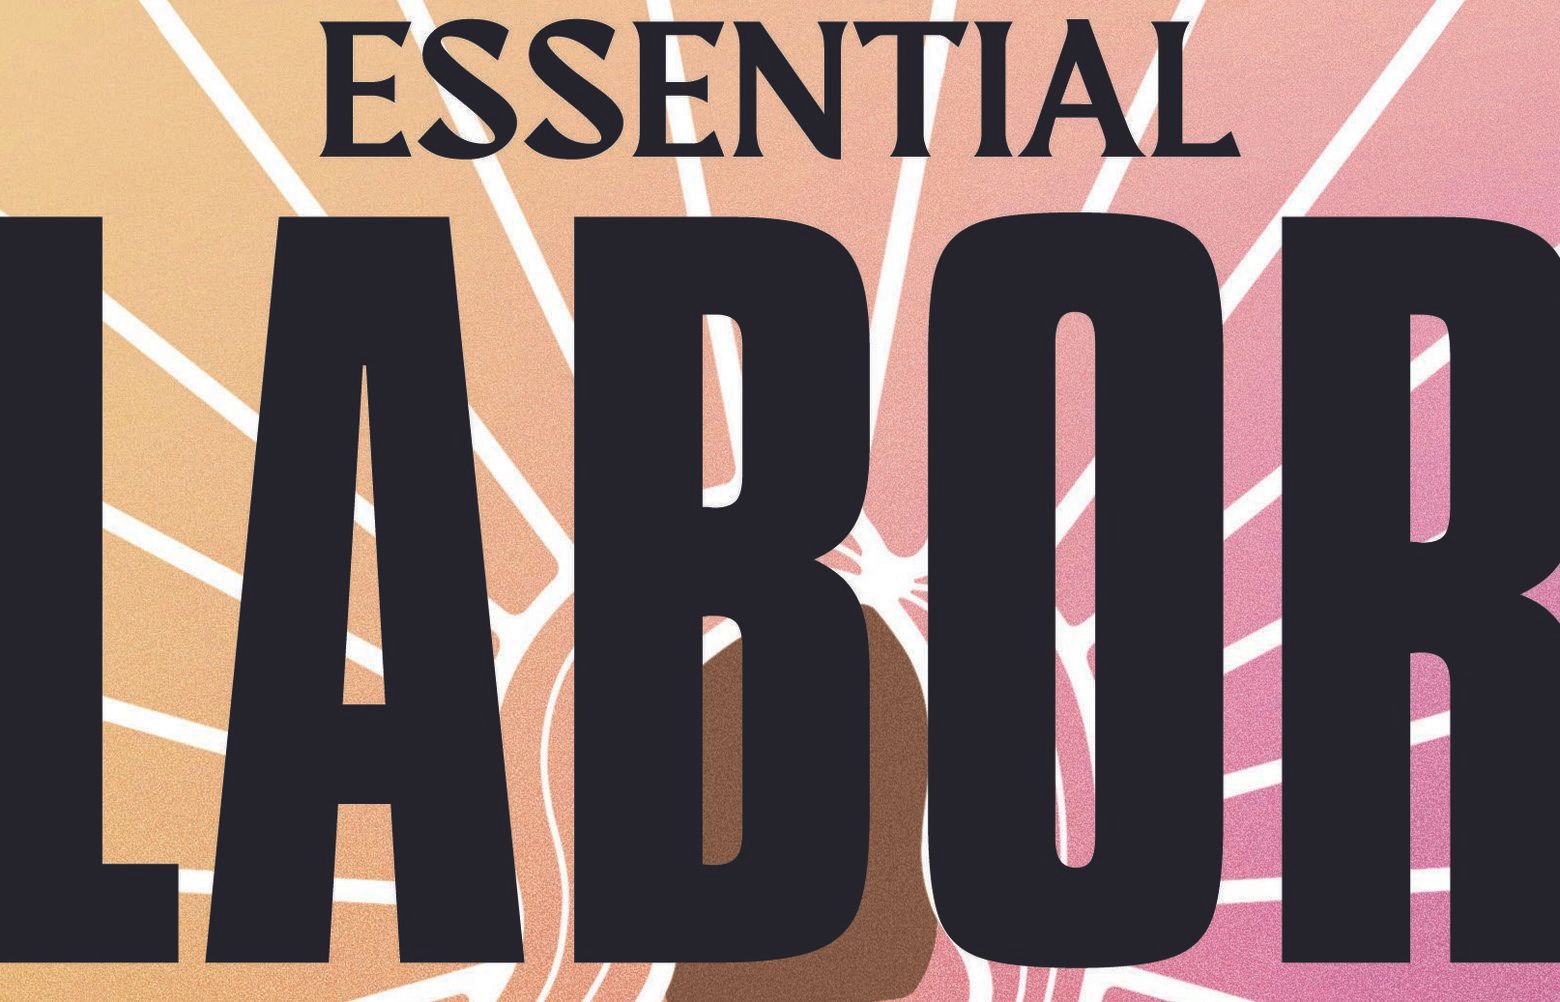 Essential Labor by Angela Garbes